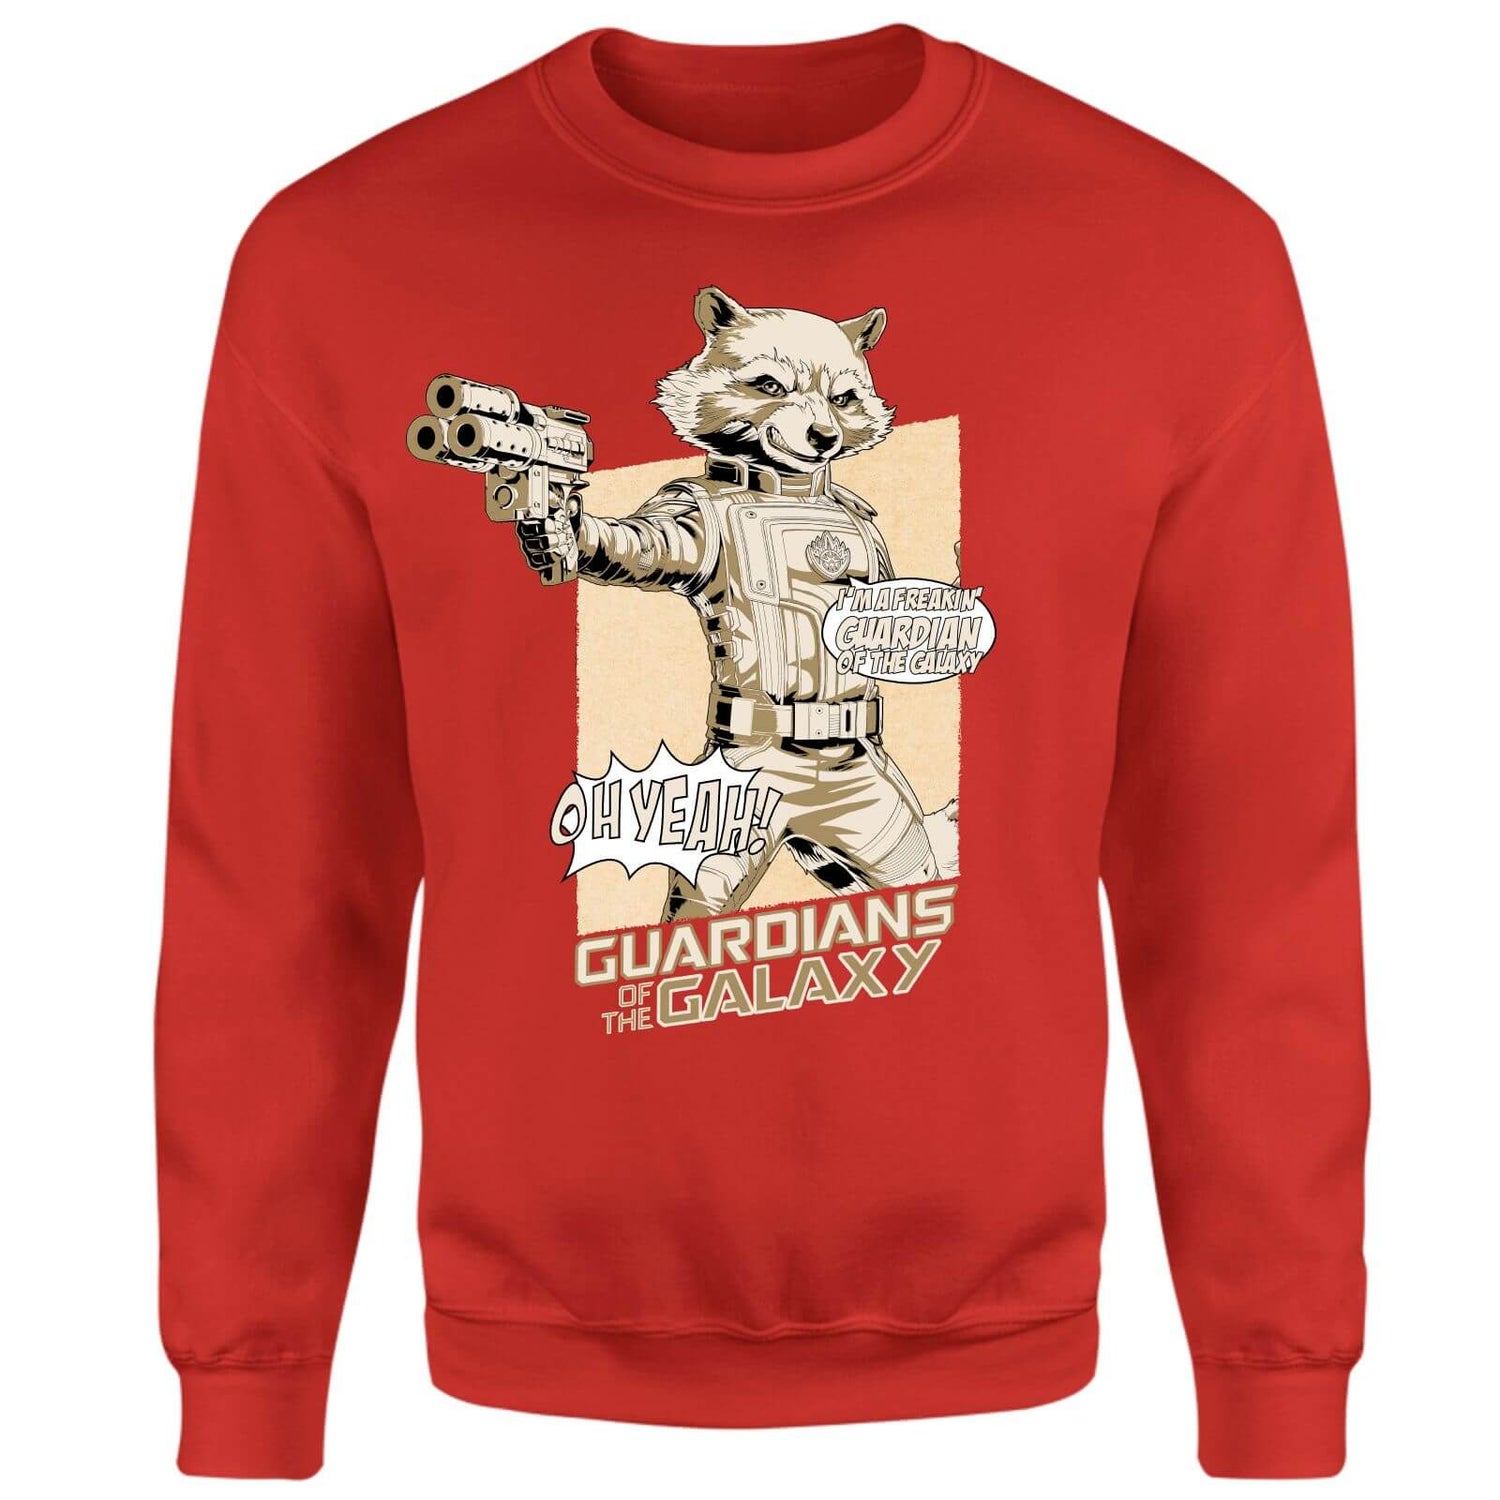 Guardians of the Galaxy Rocket Raccoon Oh Yeah! Sweatshirt - Red